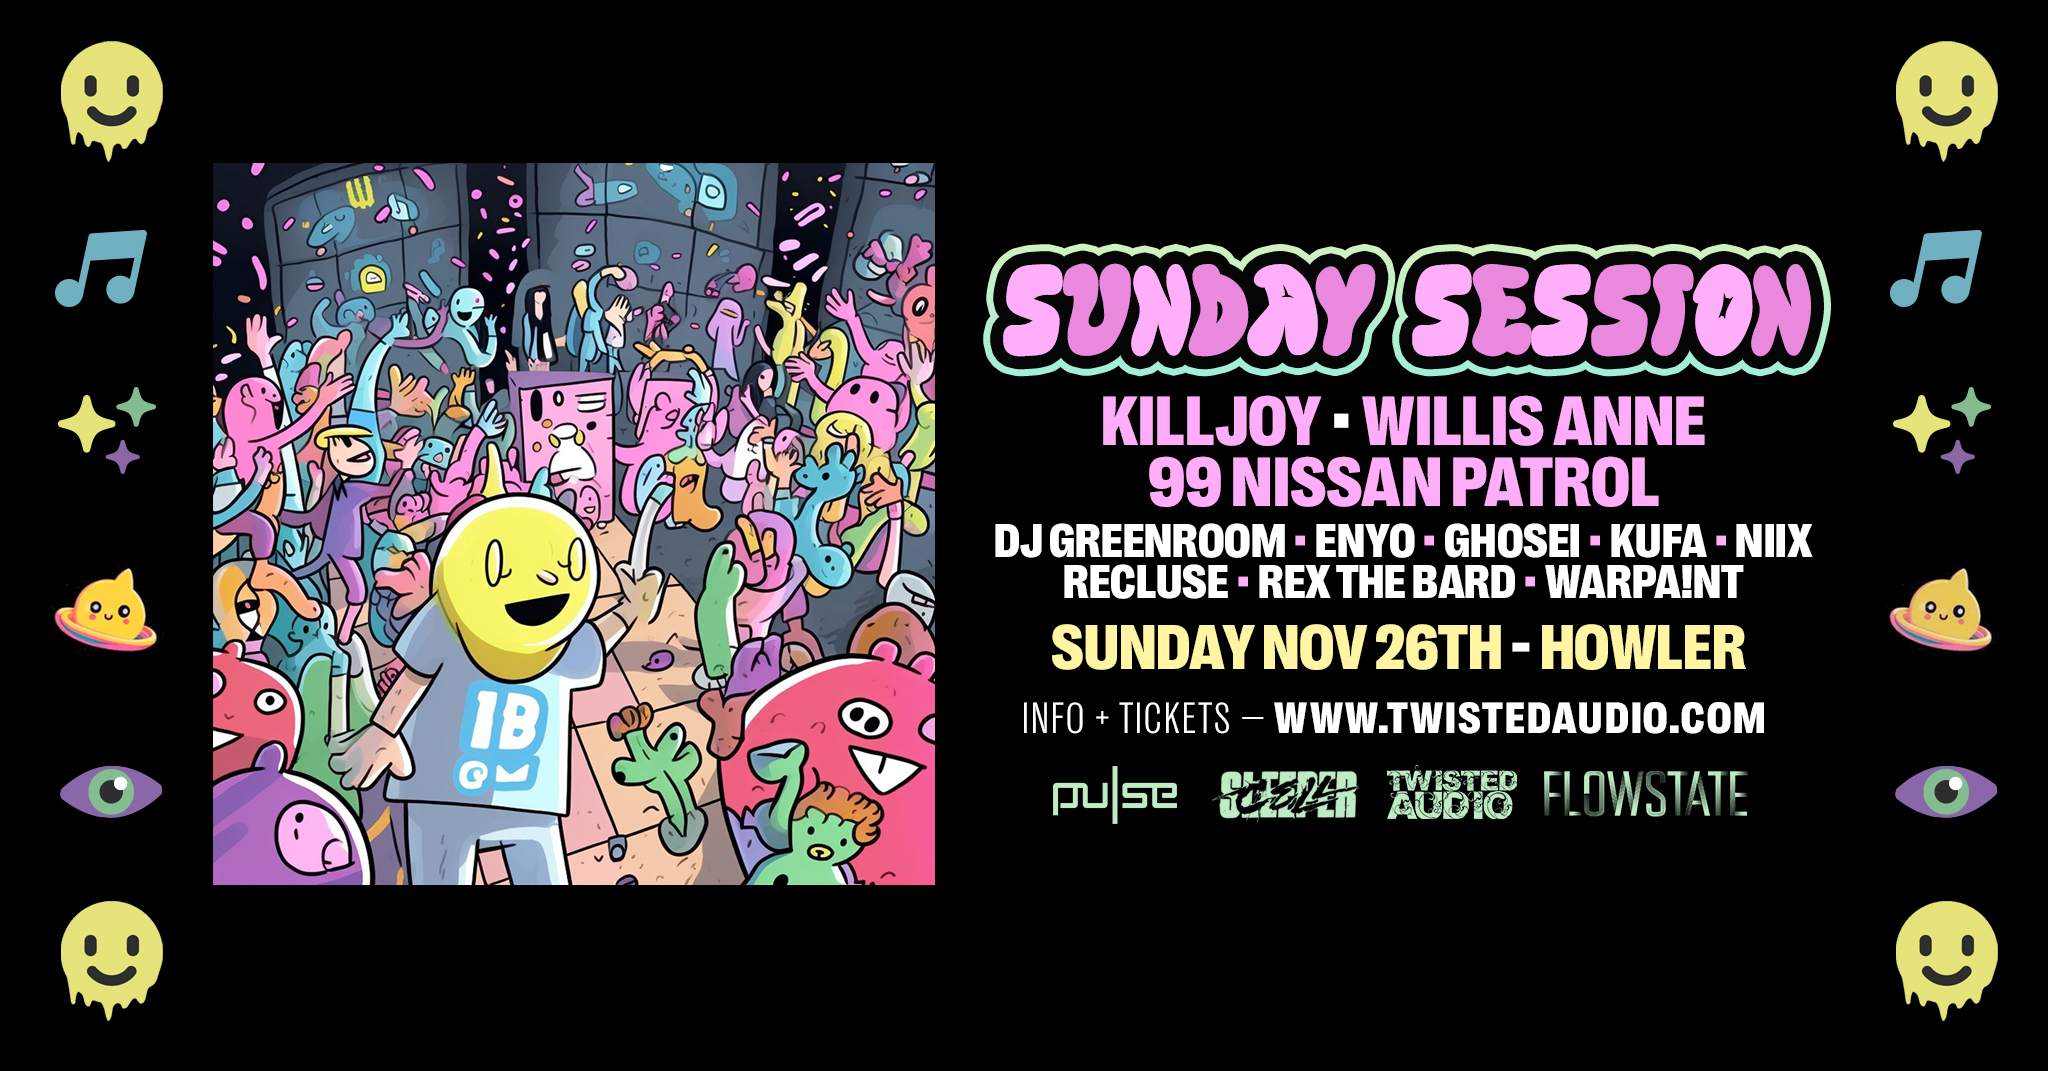 Sunday Session feat. Killjoy - Willis Anne - 99 Nissan Patrol - Página trasera